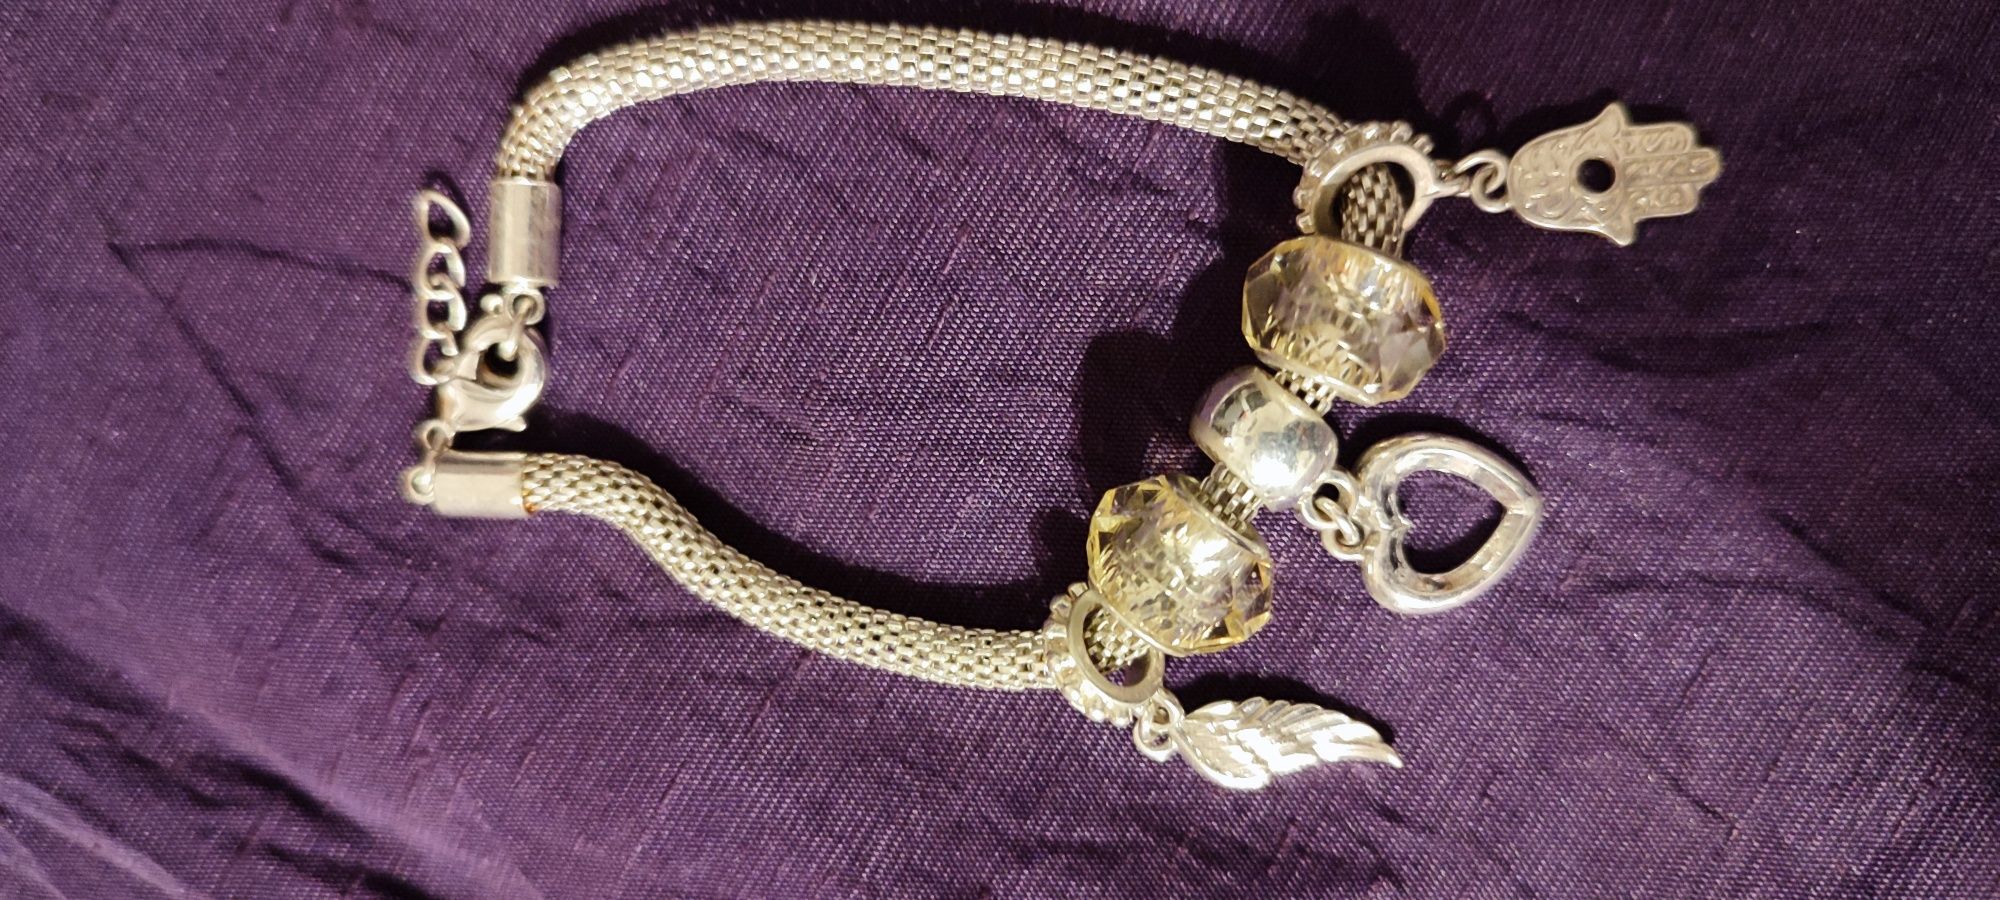 Komplet biżuterii Avon - naszyjnik, bransoletka